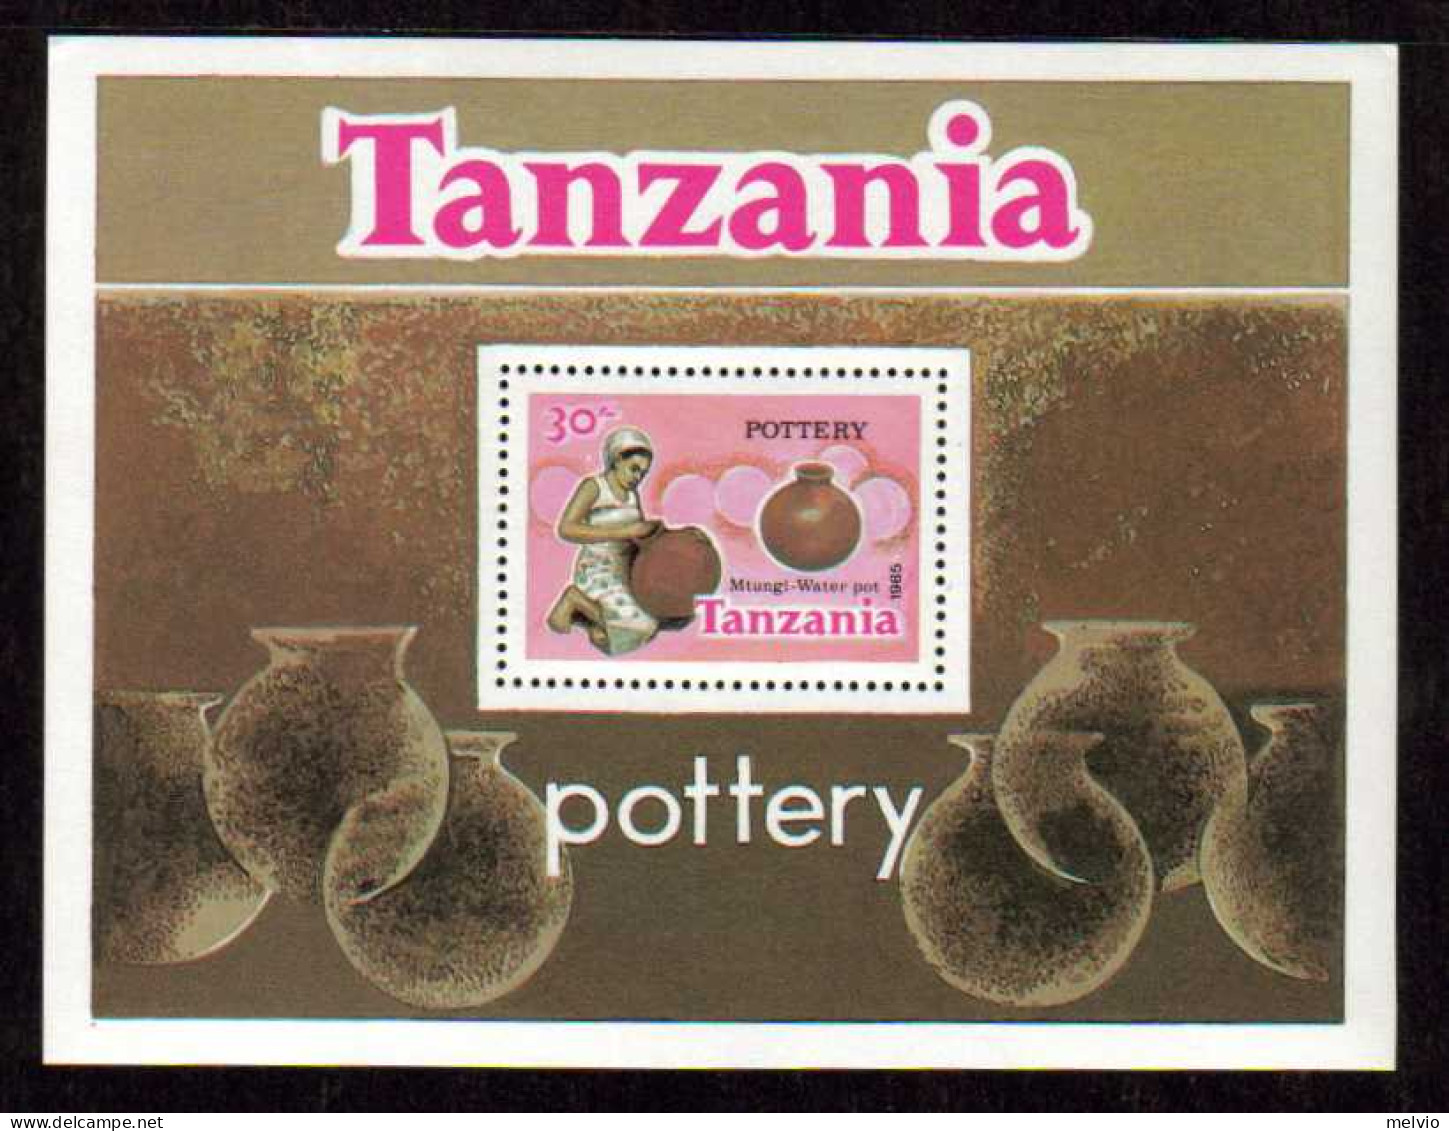 1985-Tanzania (MNH=**) Foglietto S.1v."Artigianato"catalogo Euro5,50 - Tanzania